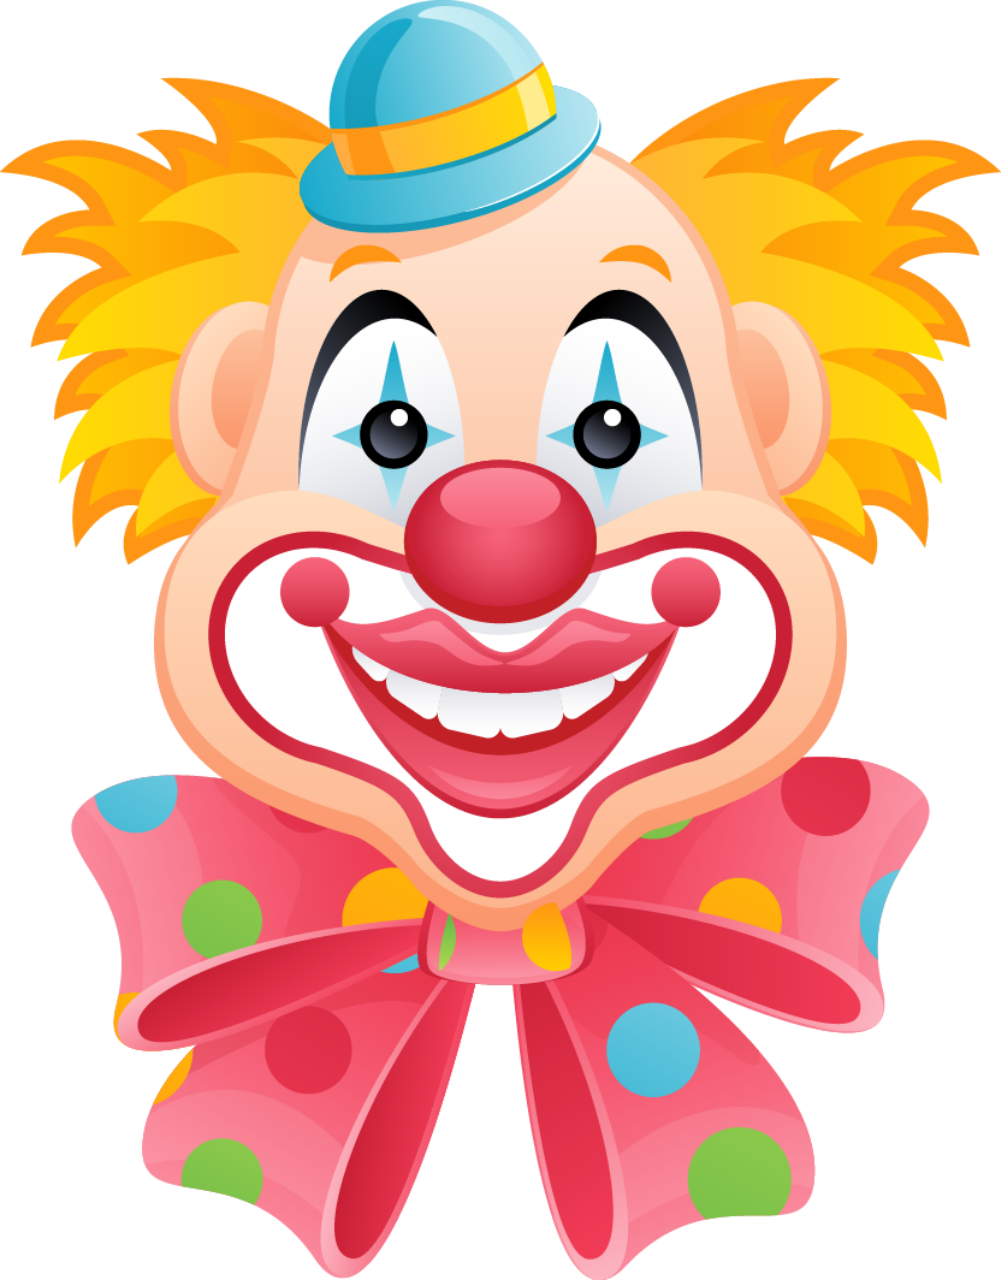 Clown Png Images Clown Emoji Transparent Free Clipart Download Free Transparent Png Logos